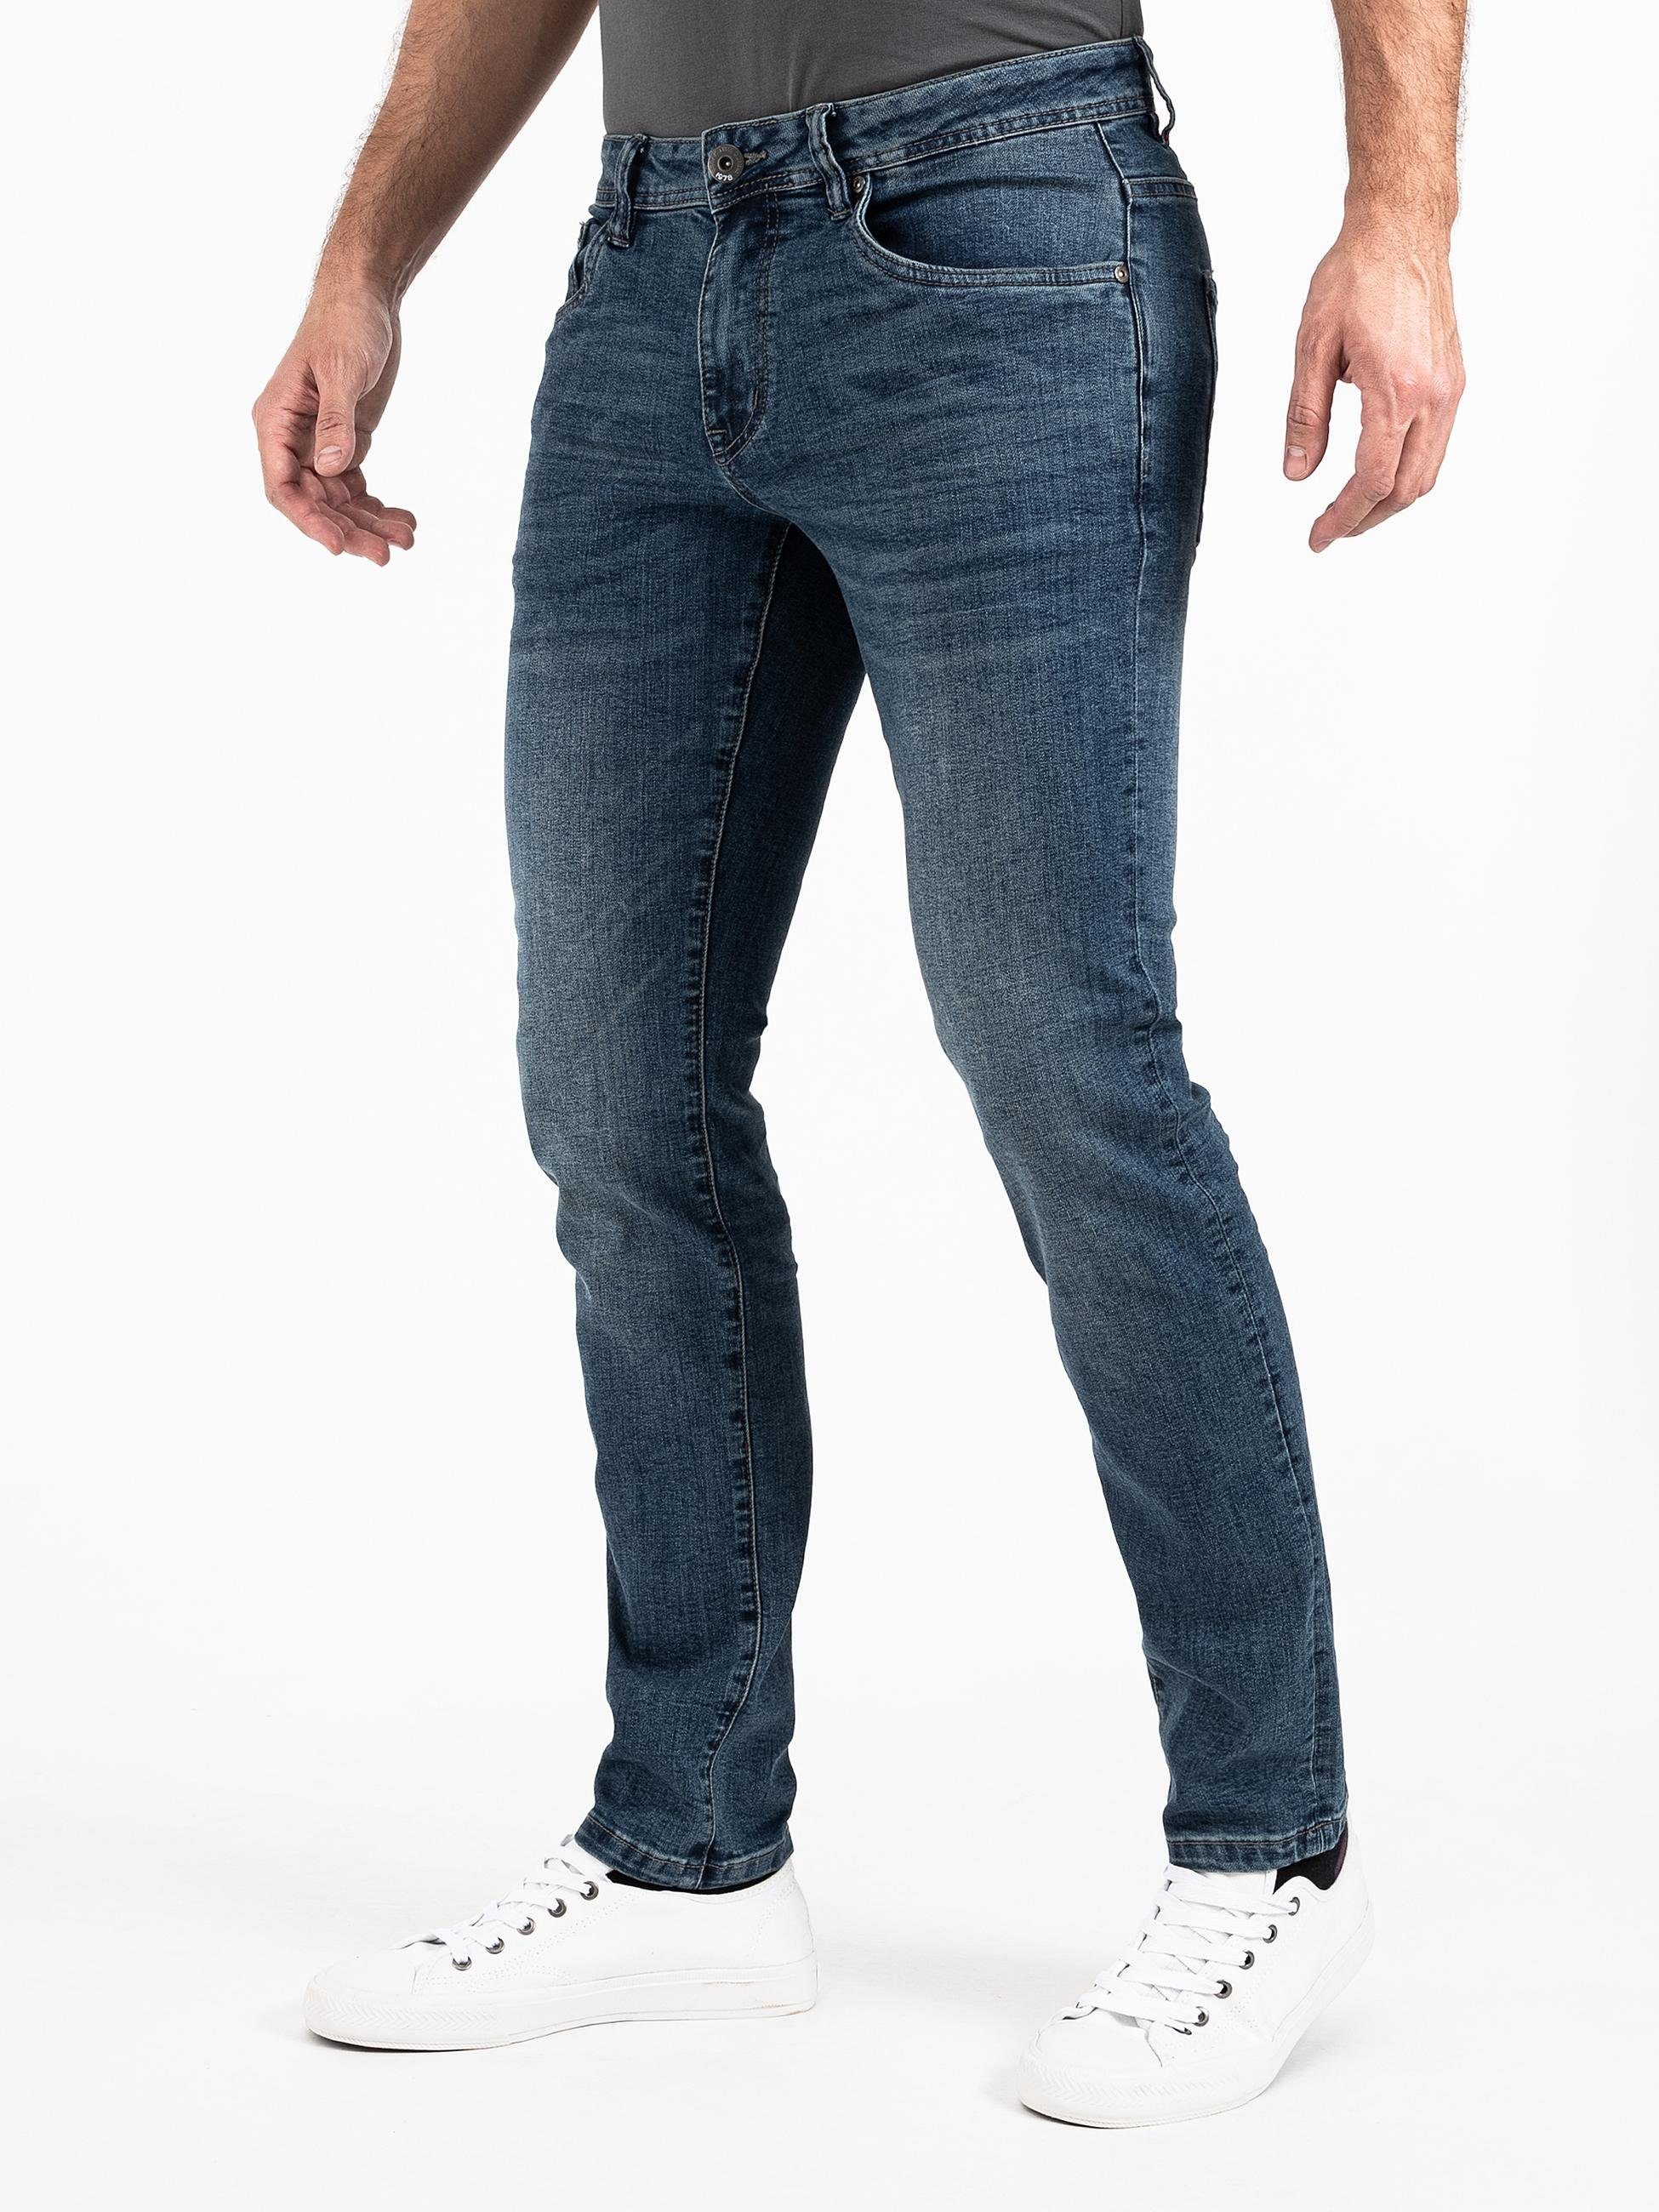 PEAK TIME Slim-fit-Jeans Mailand Herren mit Jeans blau Stretch-Anteil hohem super